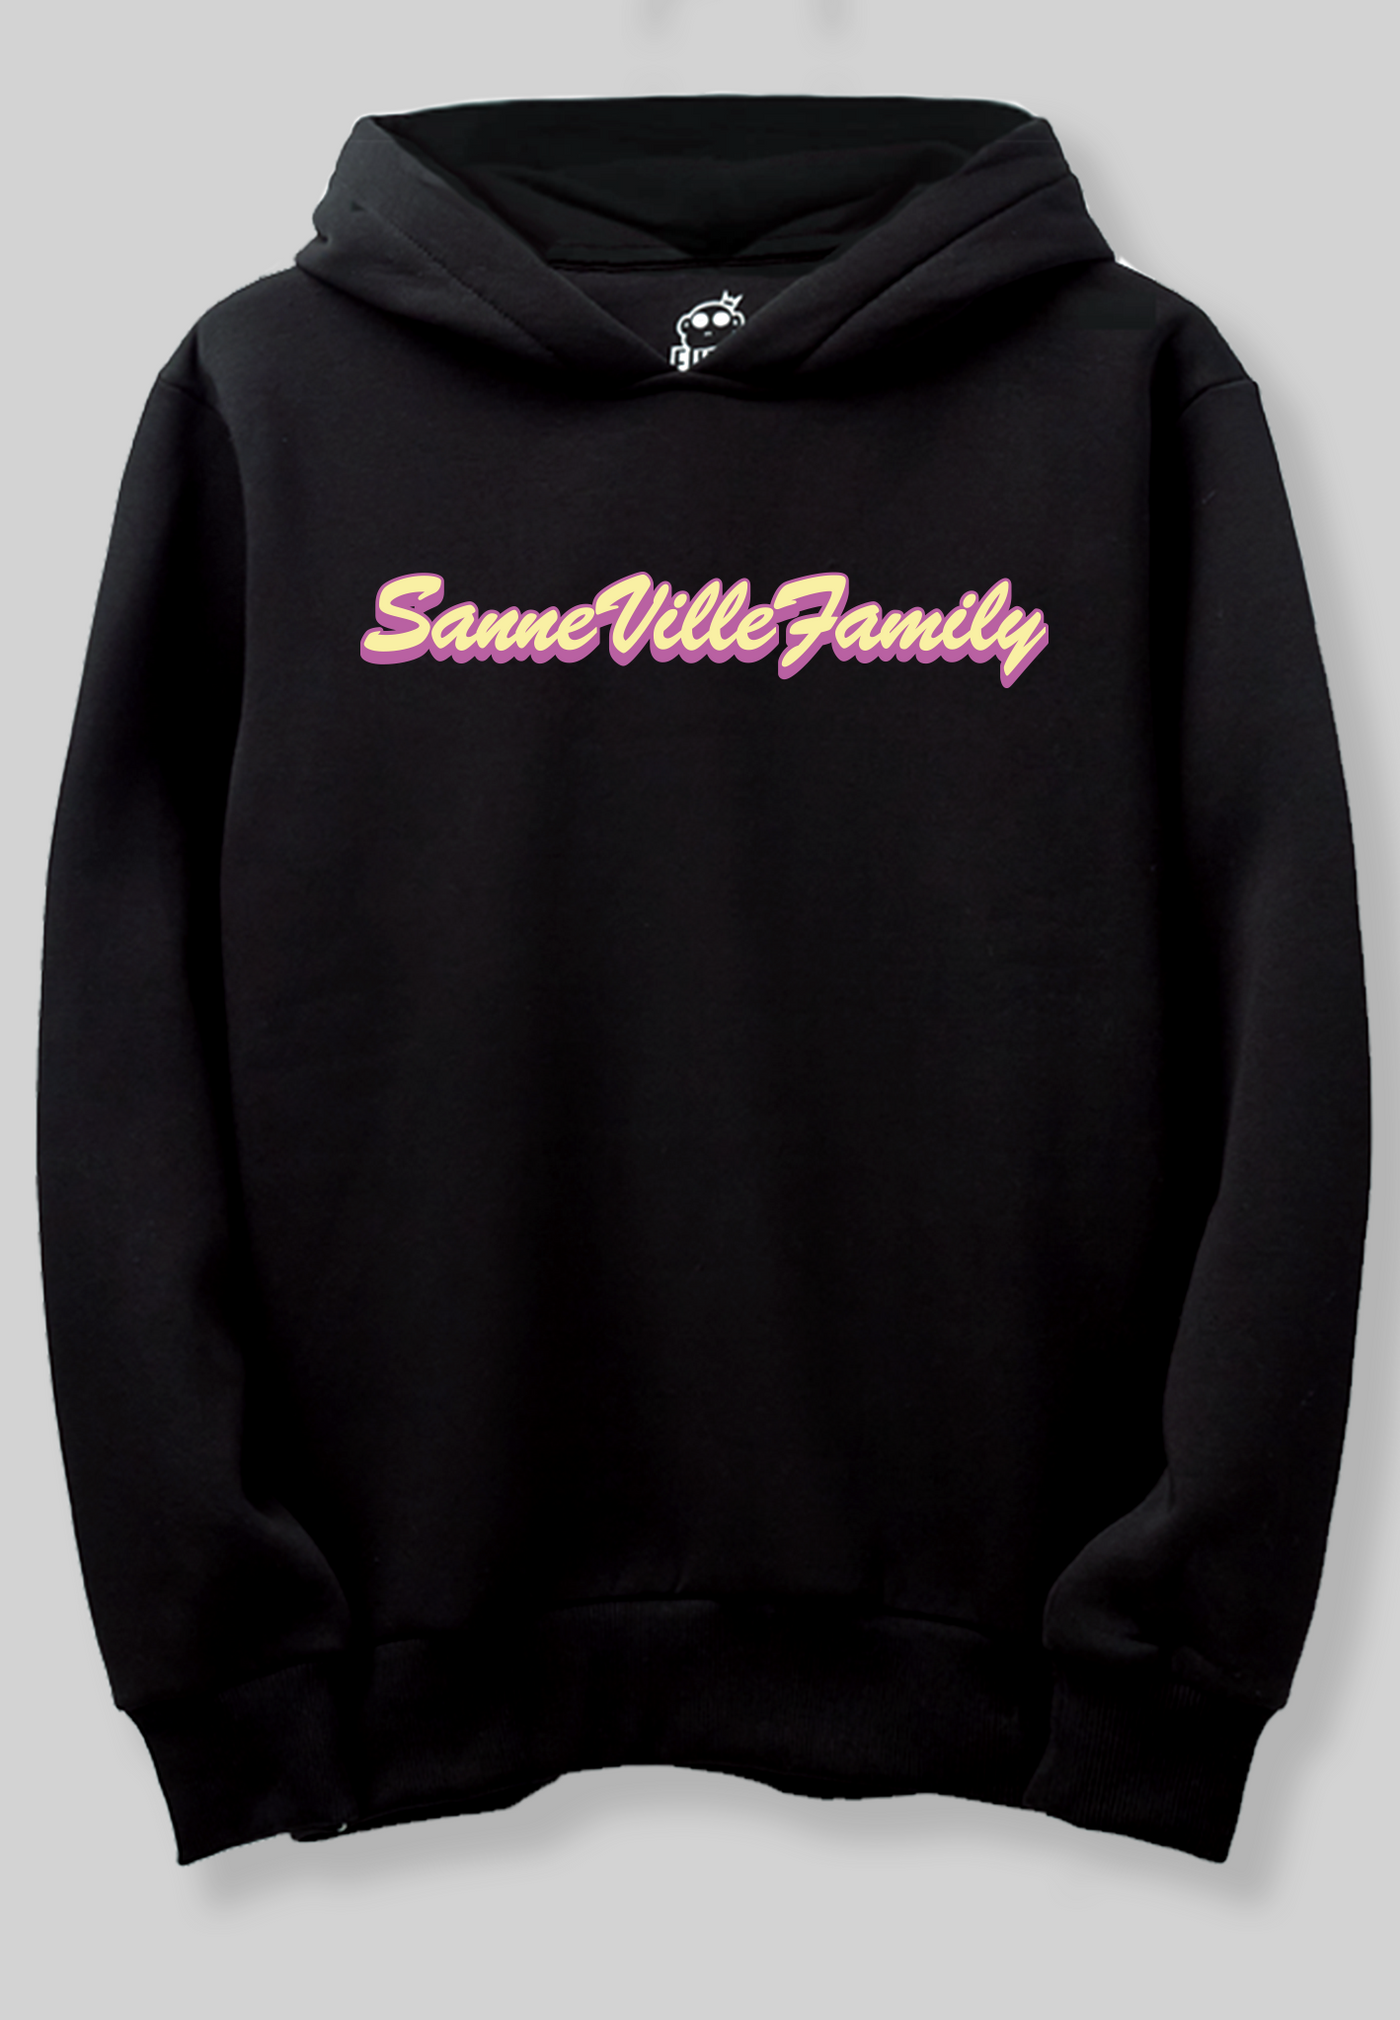 SanneVilleFamily - Text - Sort hoodie